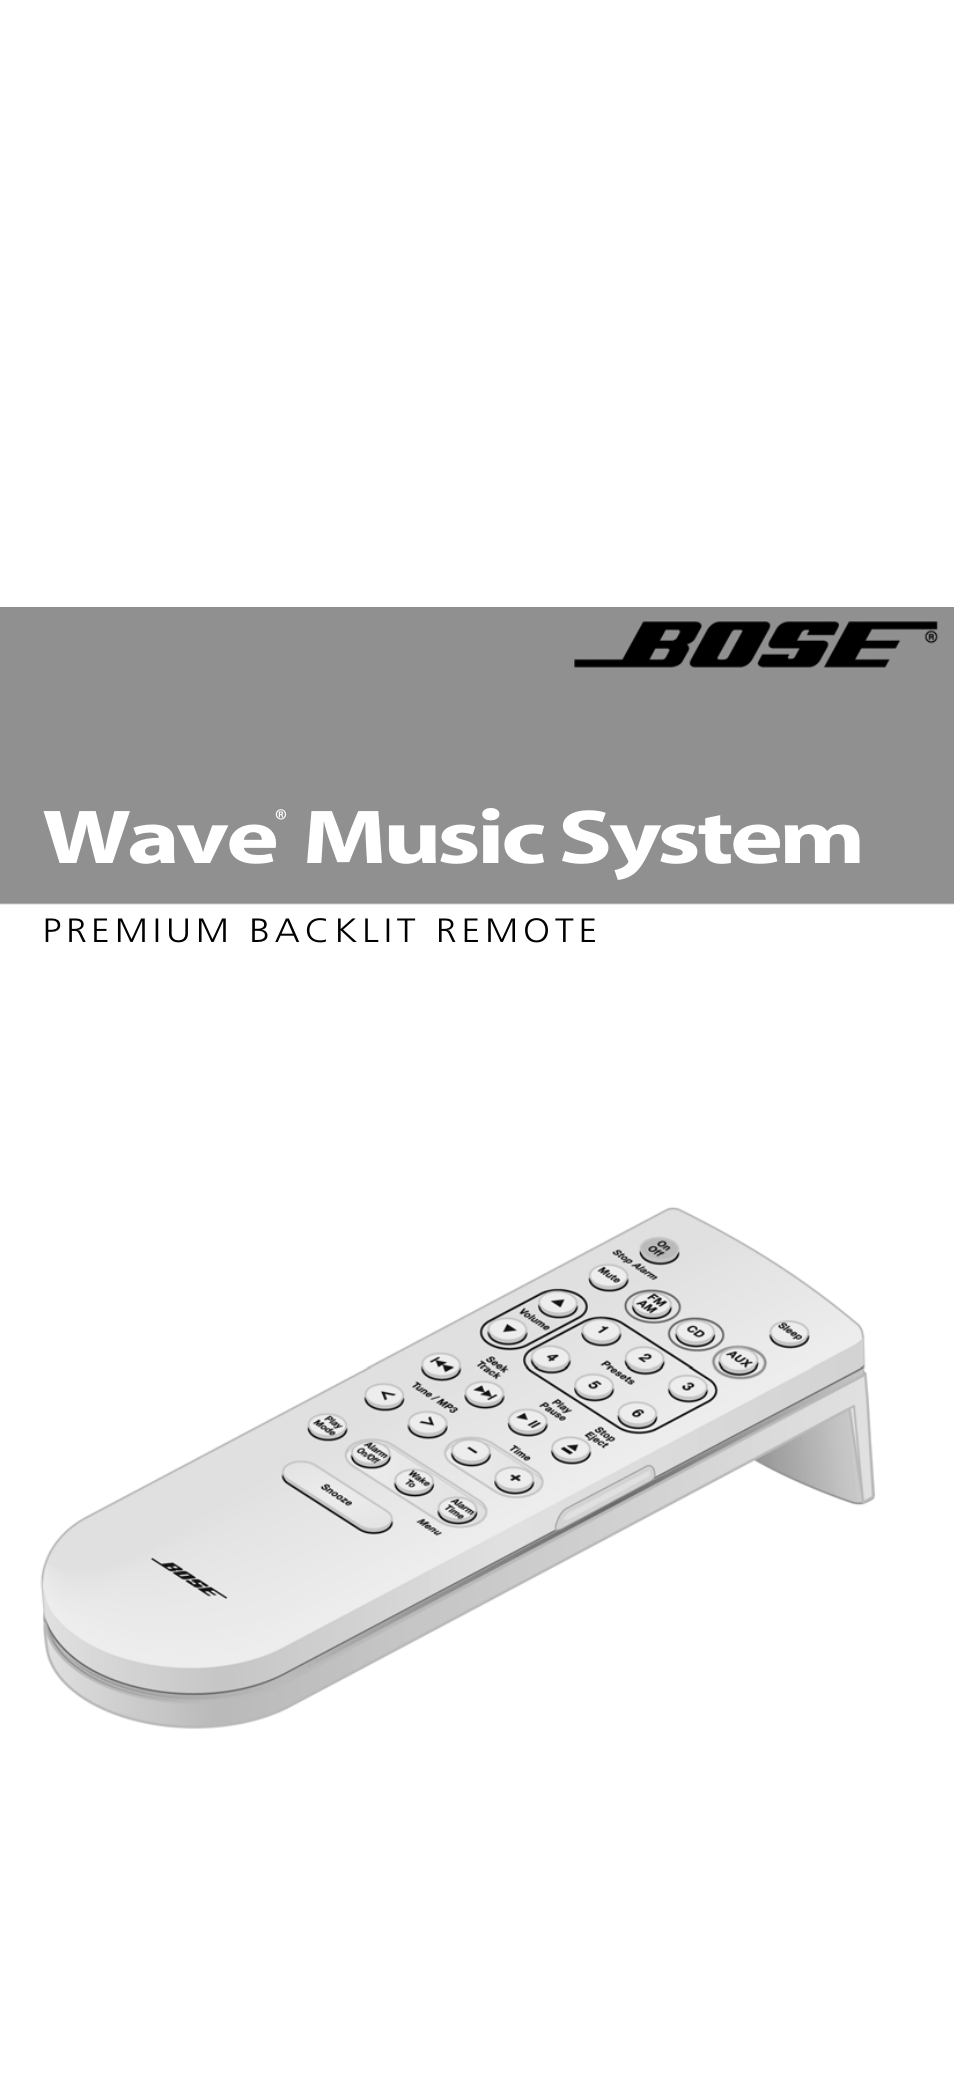 Bose Wave music system premium backlit remote User Manual | 24 pages